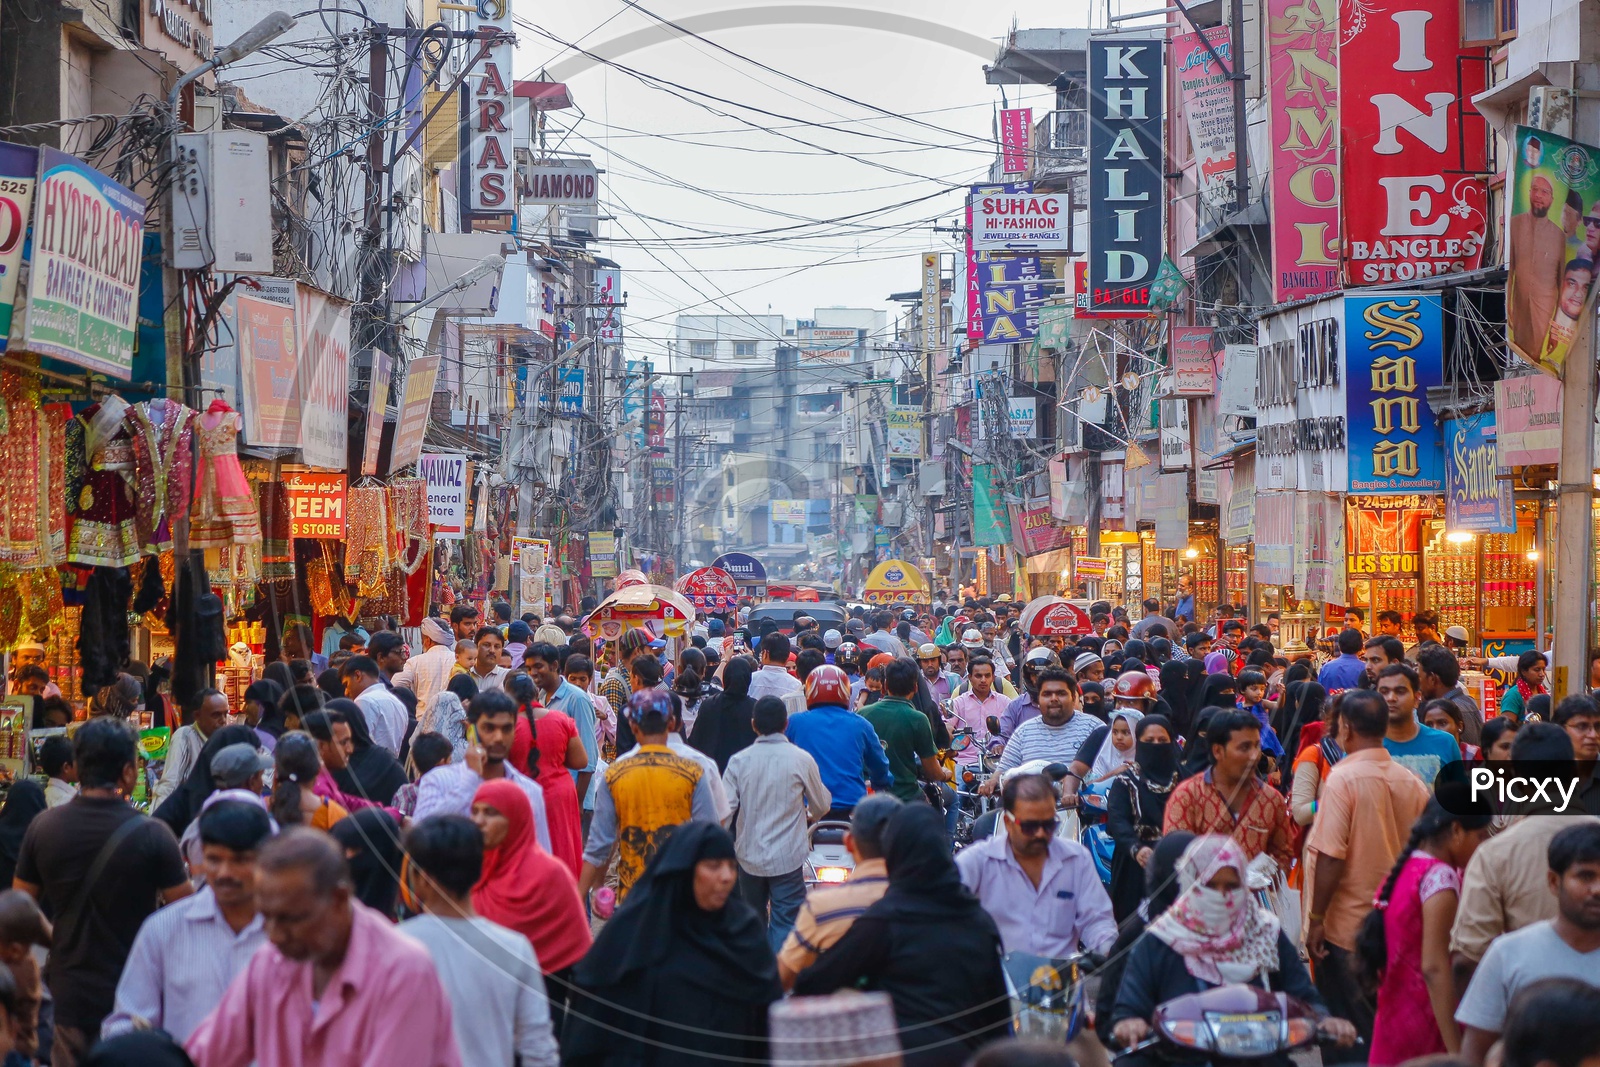 Crowd at street bazaar